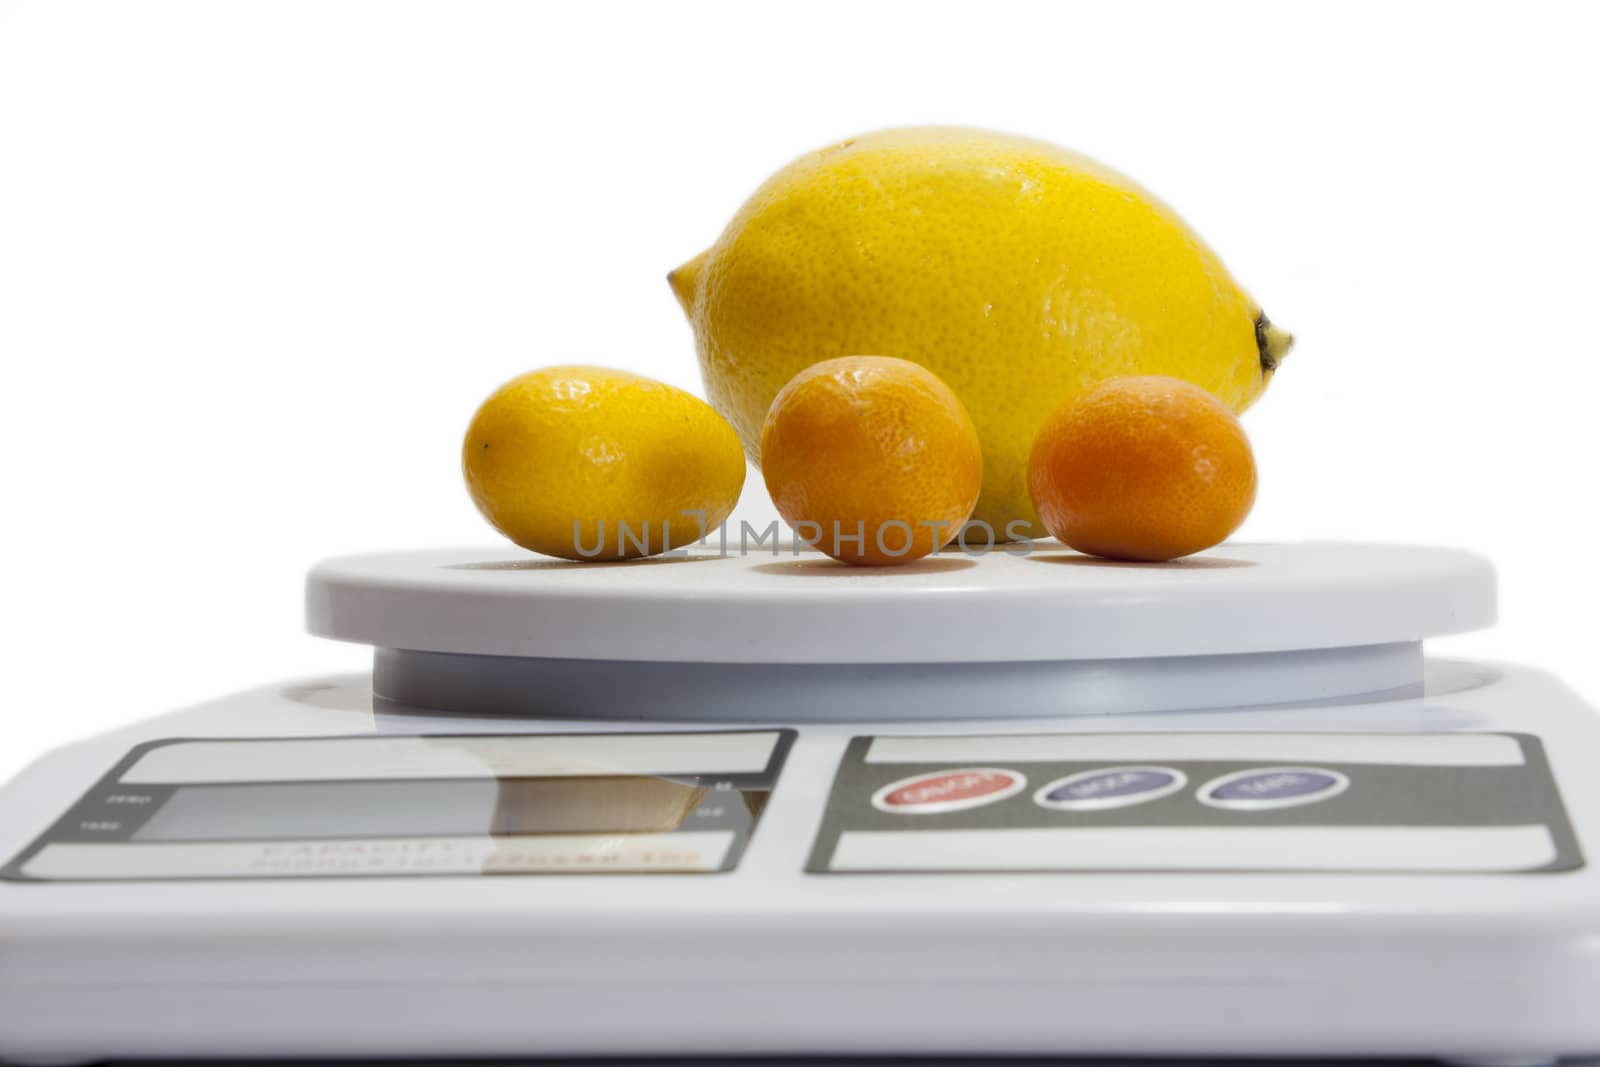 Lemon and kumquats on a kitchen digital scale.